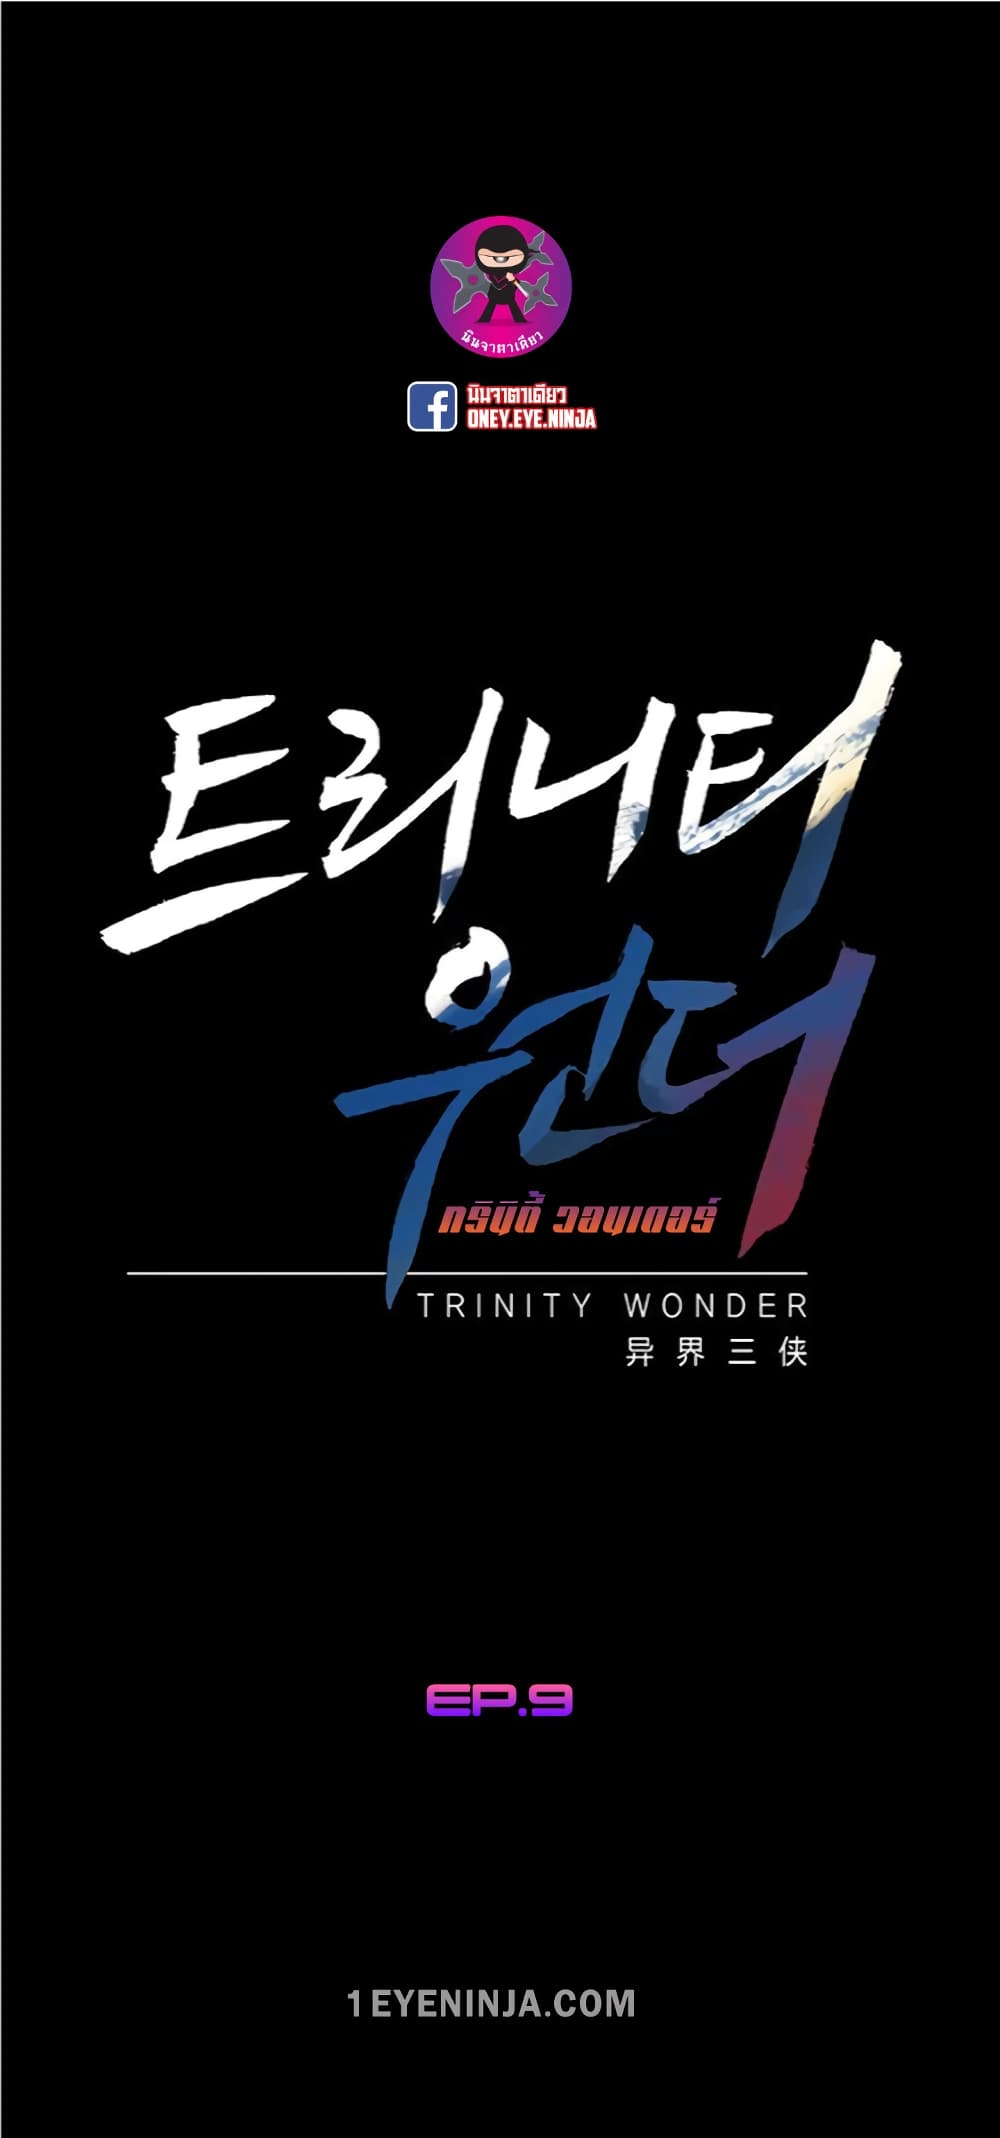 Trinity Wonder 9 (2)